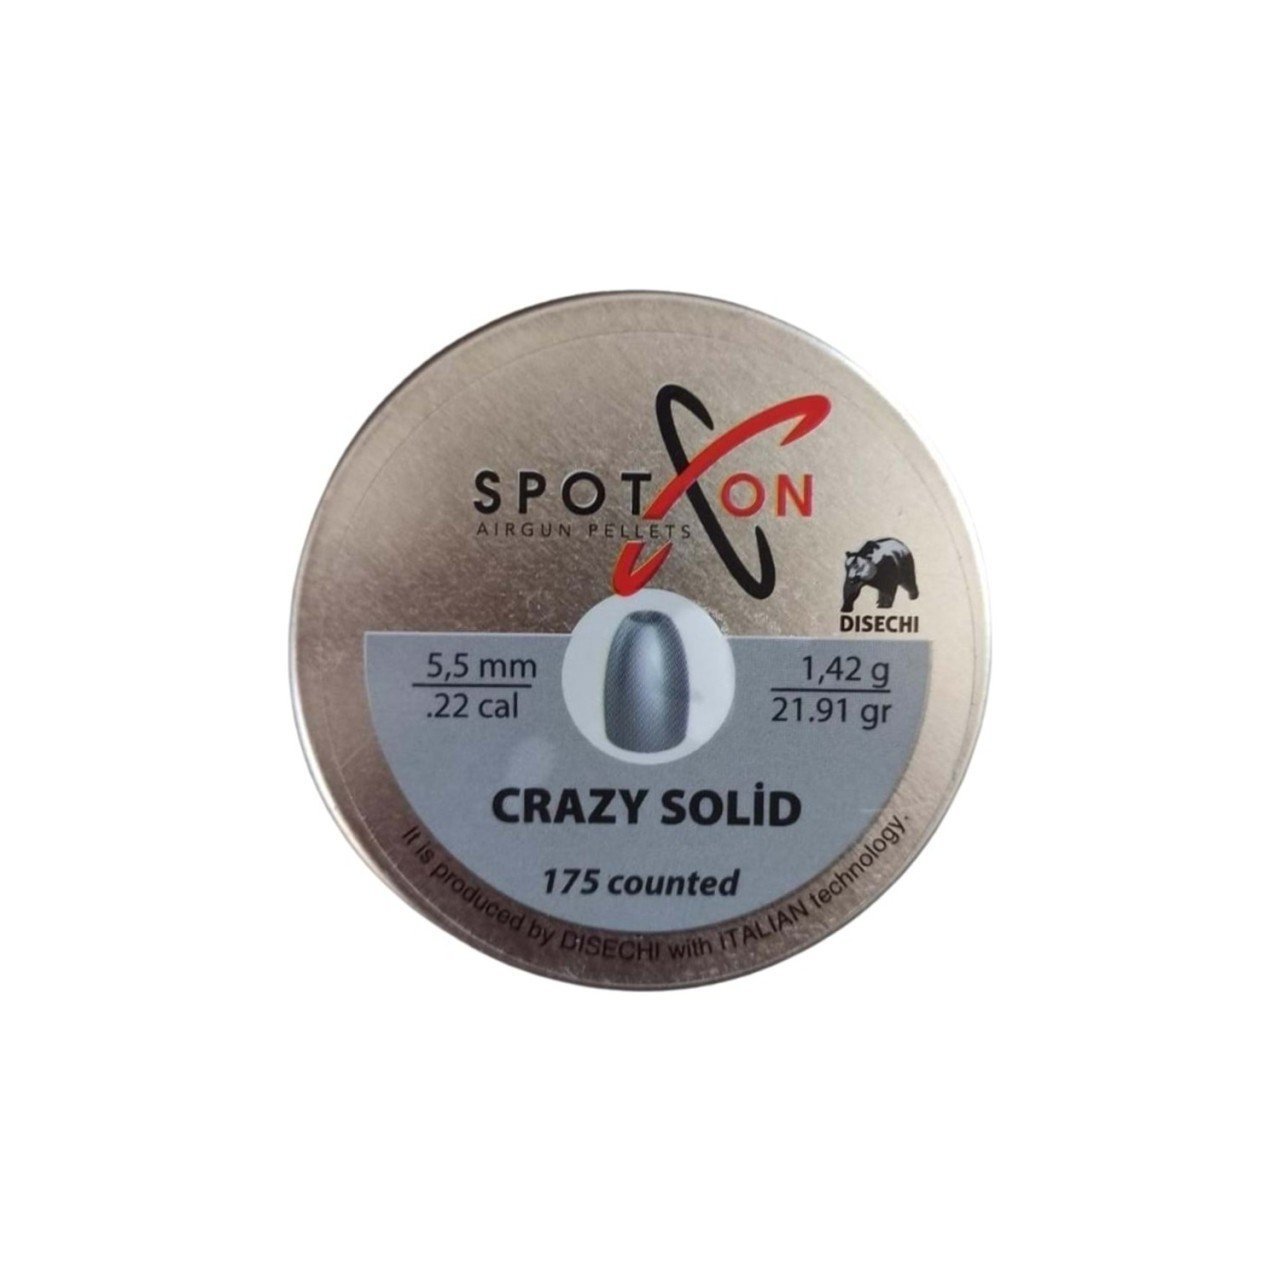 Spoton Crazy Solid 5.5mm Havalı Tüfek Saçması, Pellet